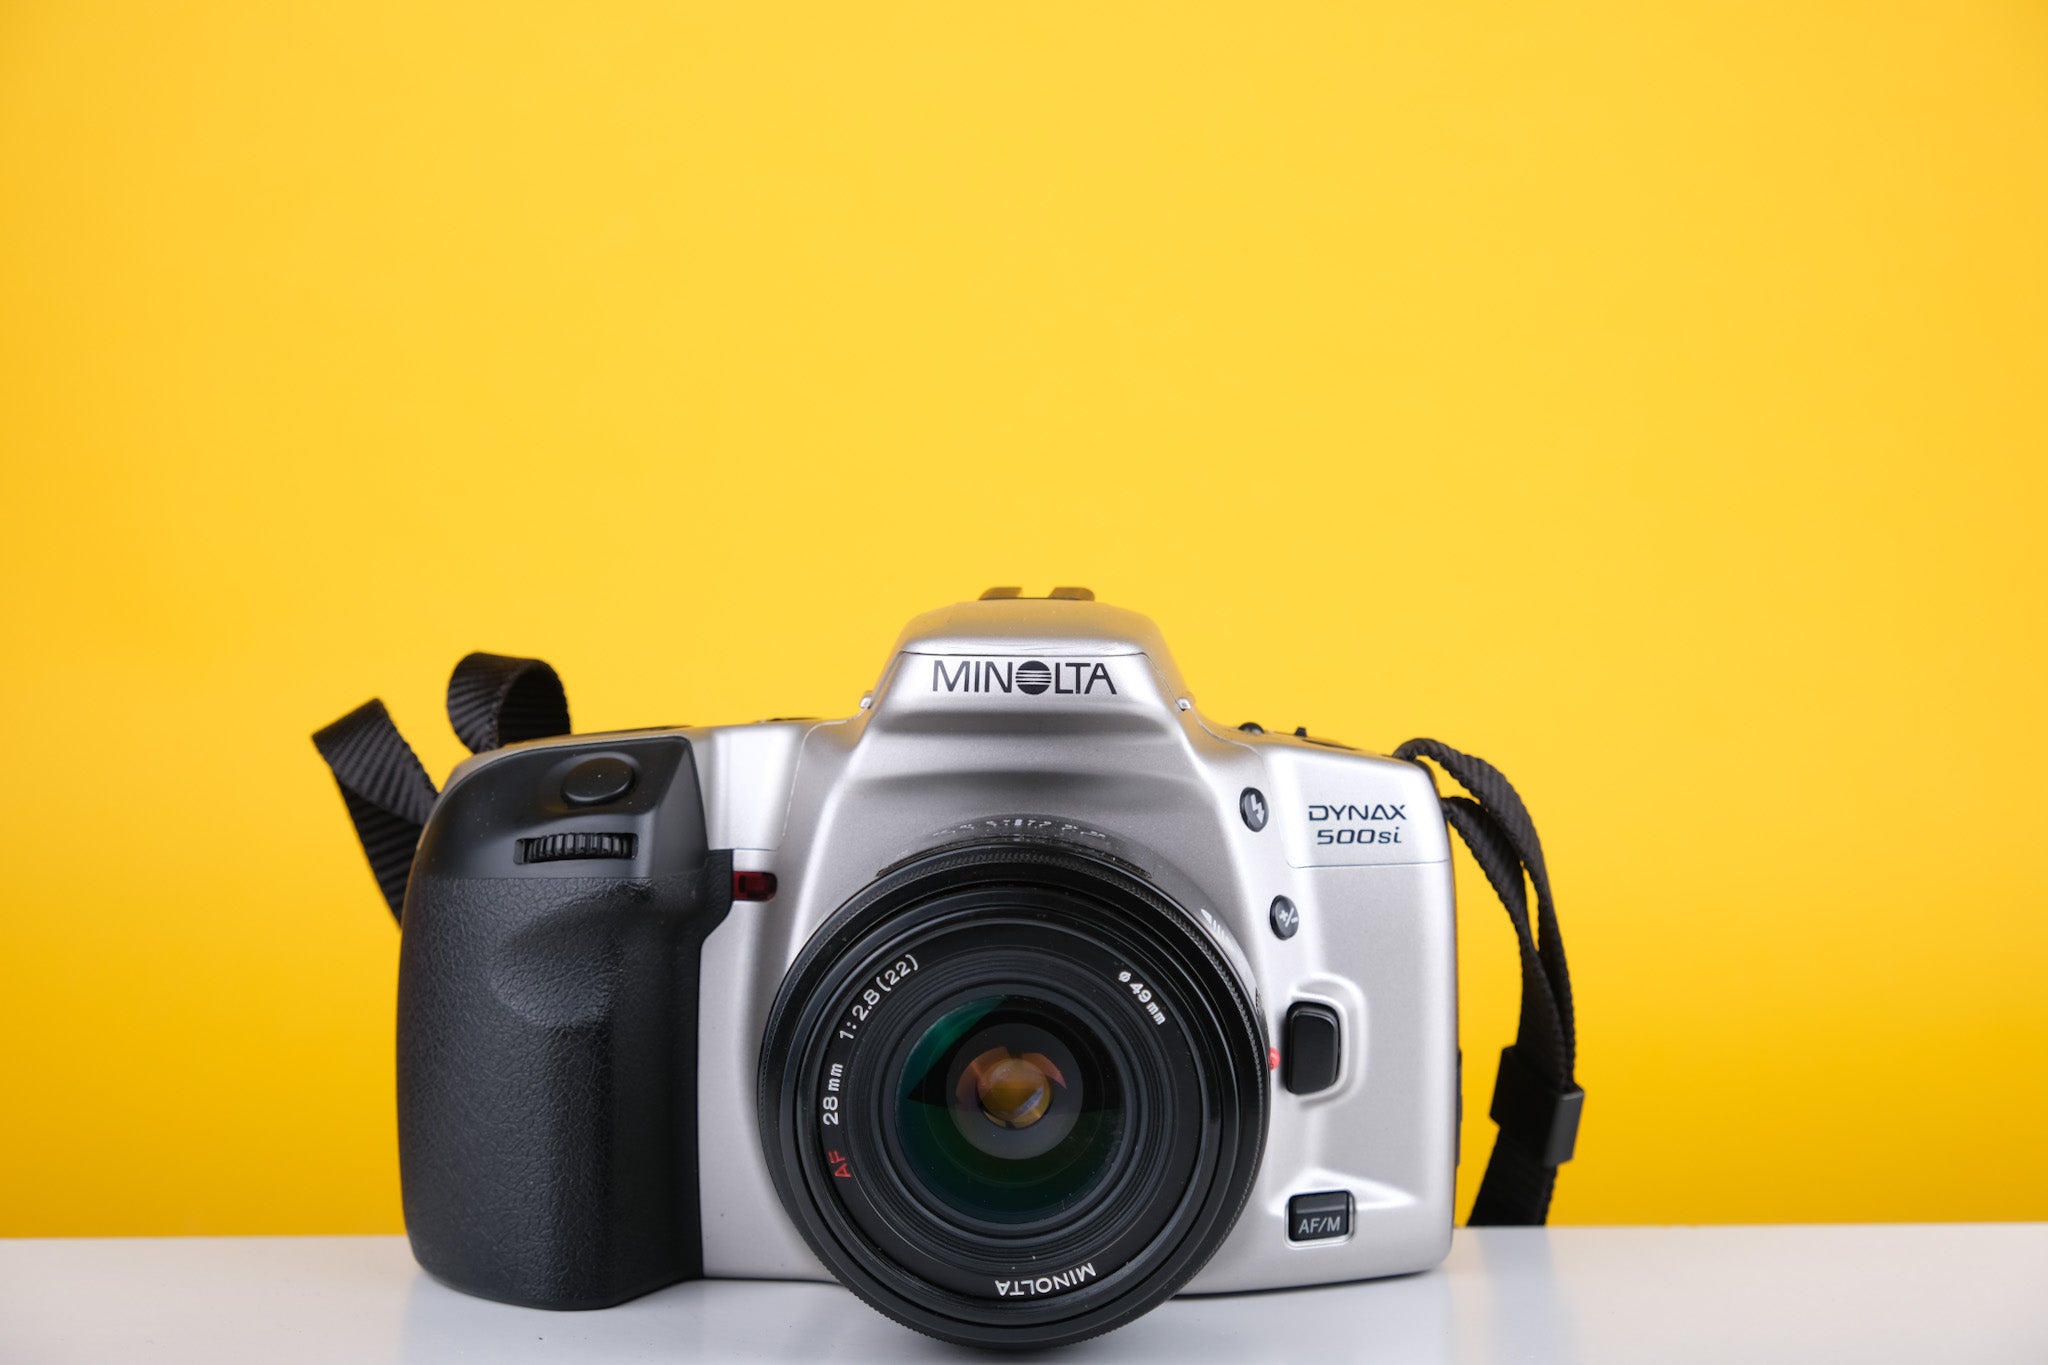 Minolta 500si 35mm SLR Film Camera With 28mm f2.8 Lens